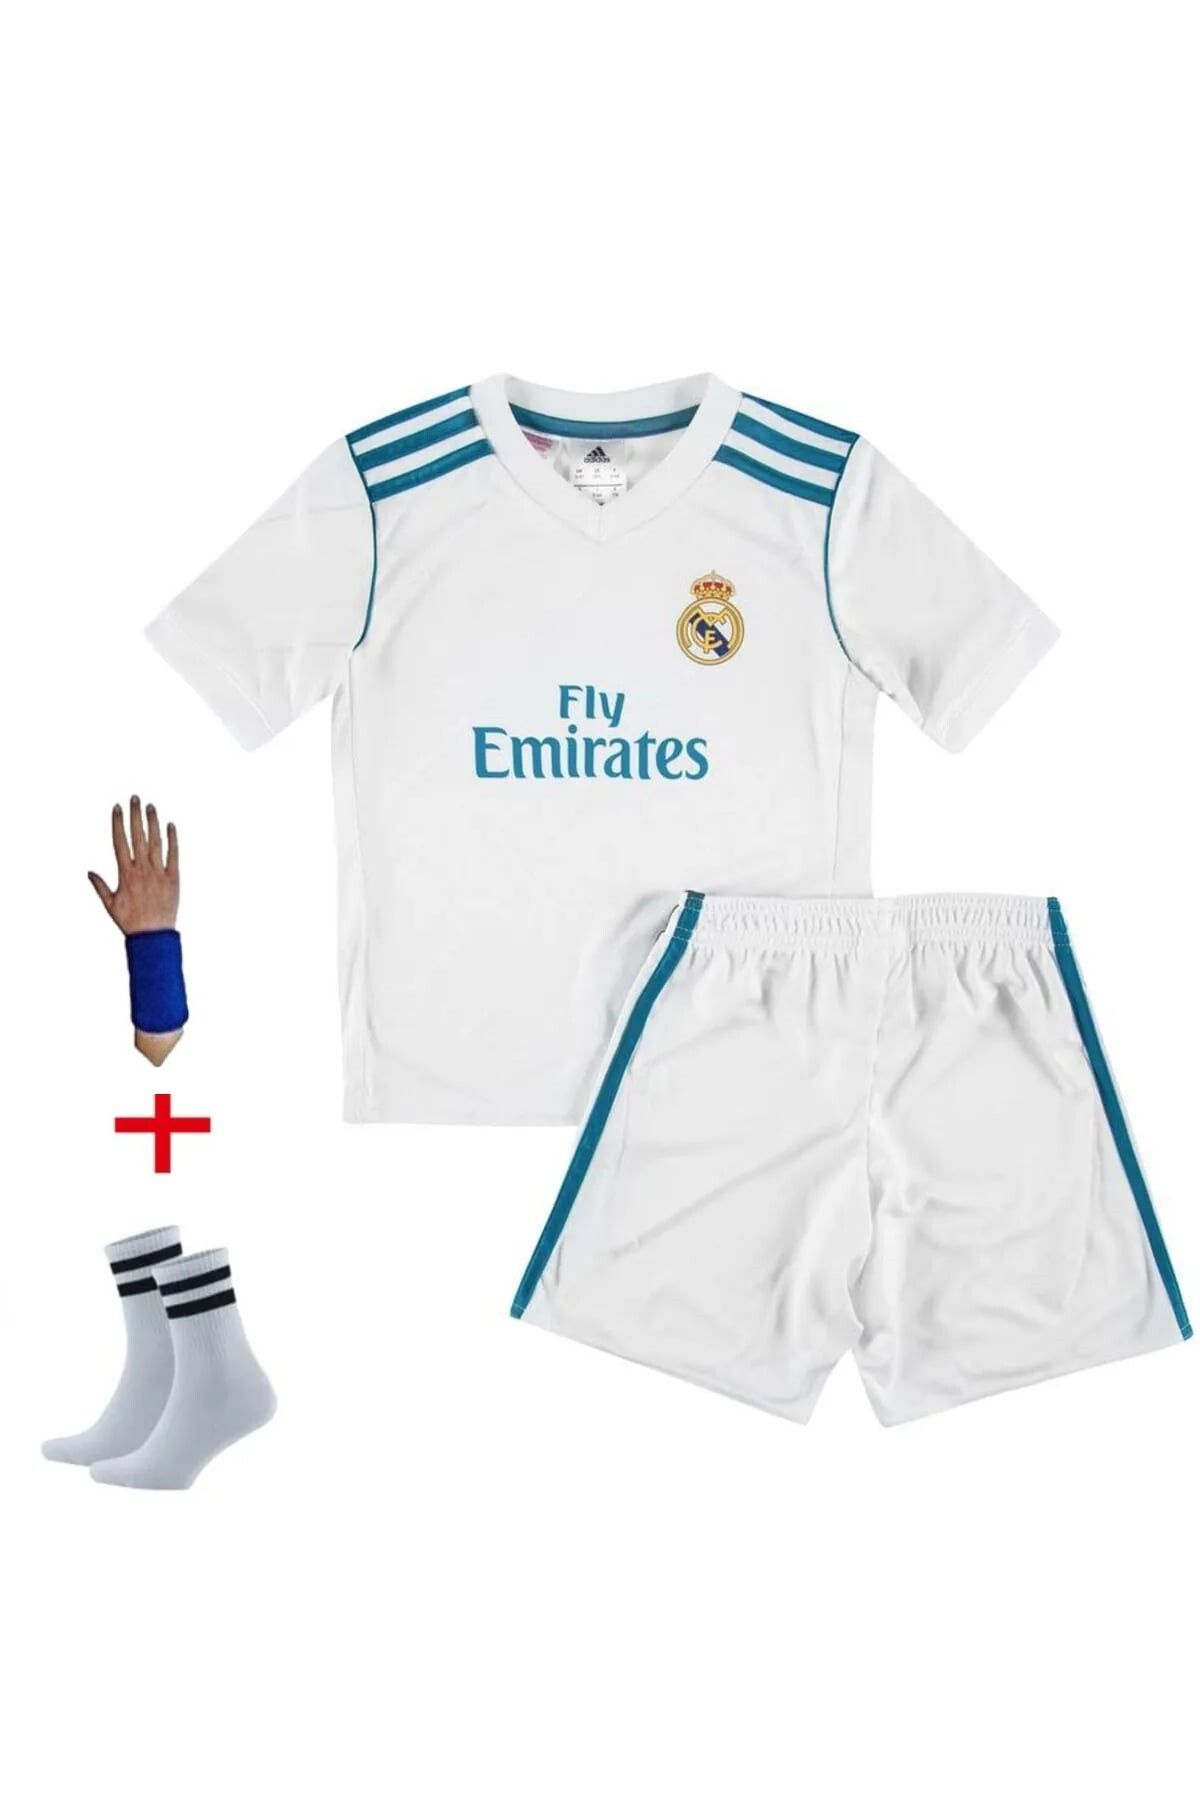 gökmenspor Real Madrid Sergio Ramos Çocuk Futbol Forması Takımı 4 Lü Set Cardif 2017/2018 Sezon